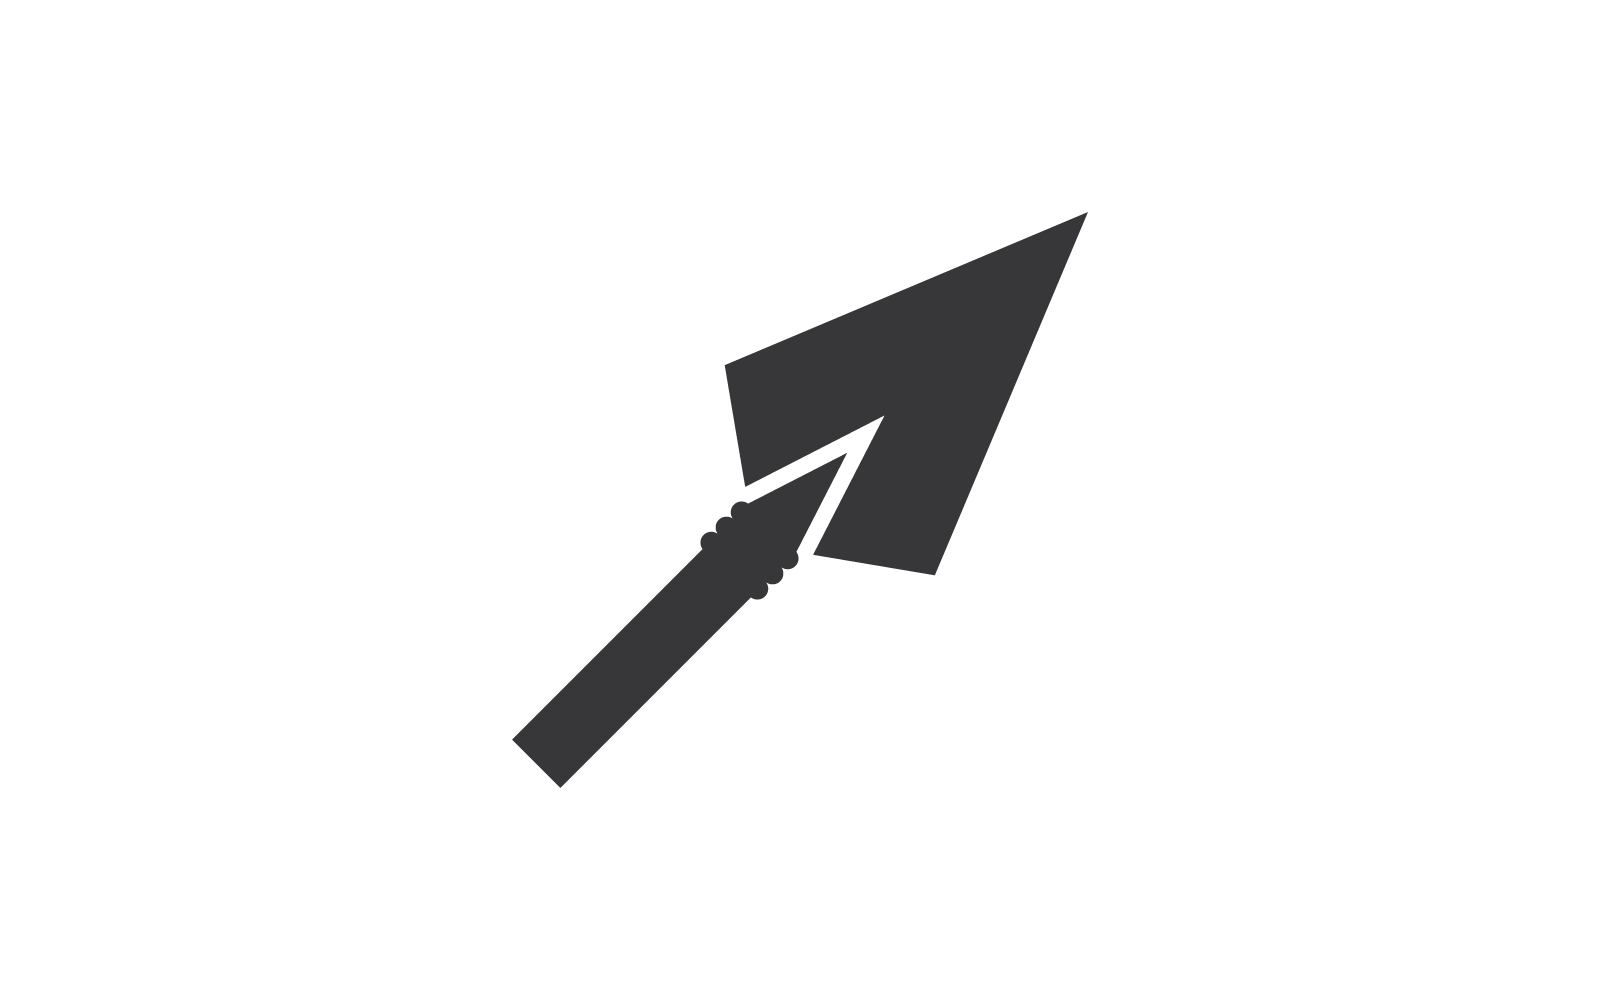 Spear logo and symbol vector design eps 10